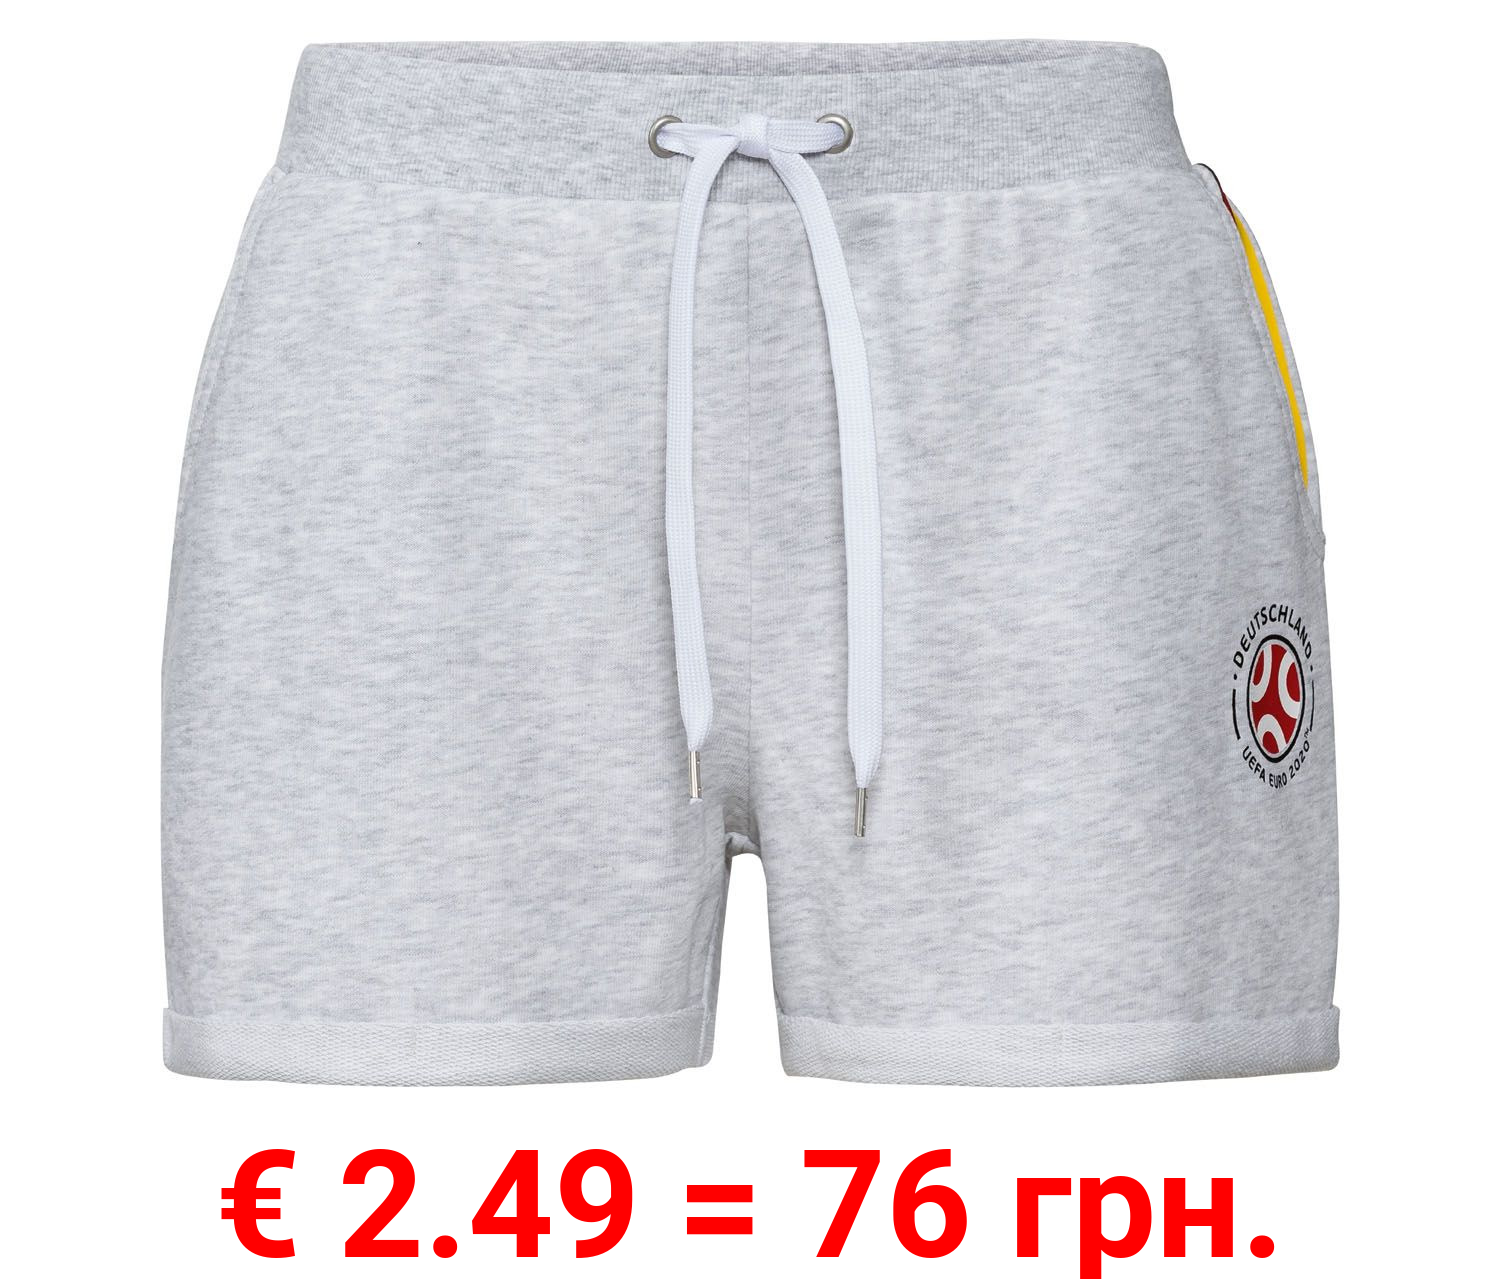 Hot Pants Damen, Deutschland, UEFA Fußball-EM